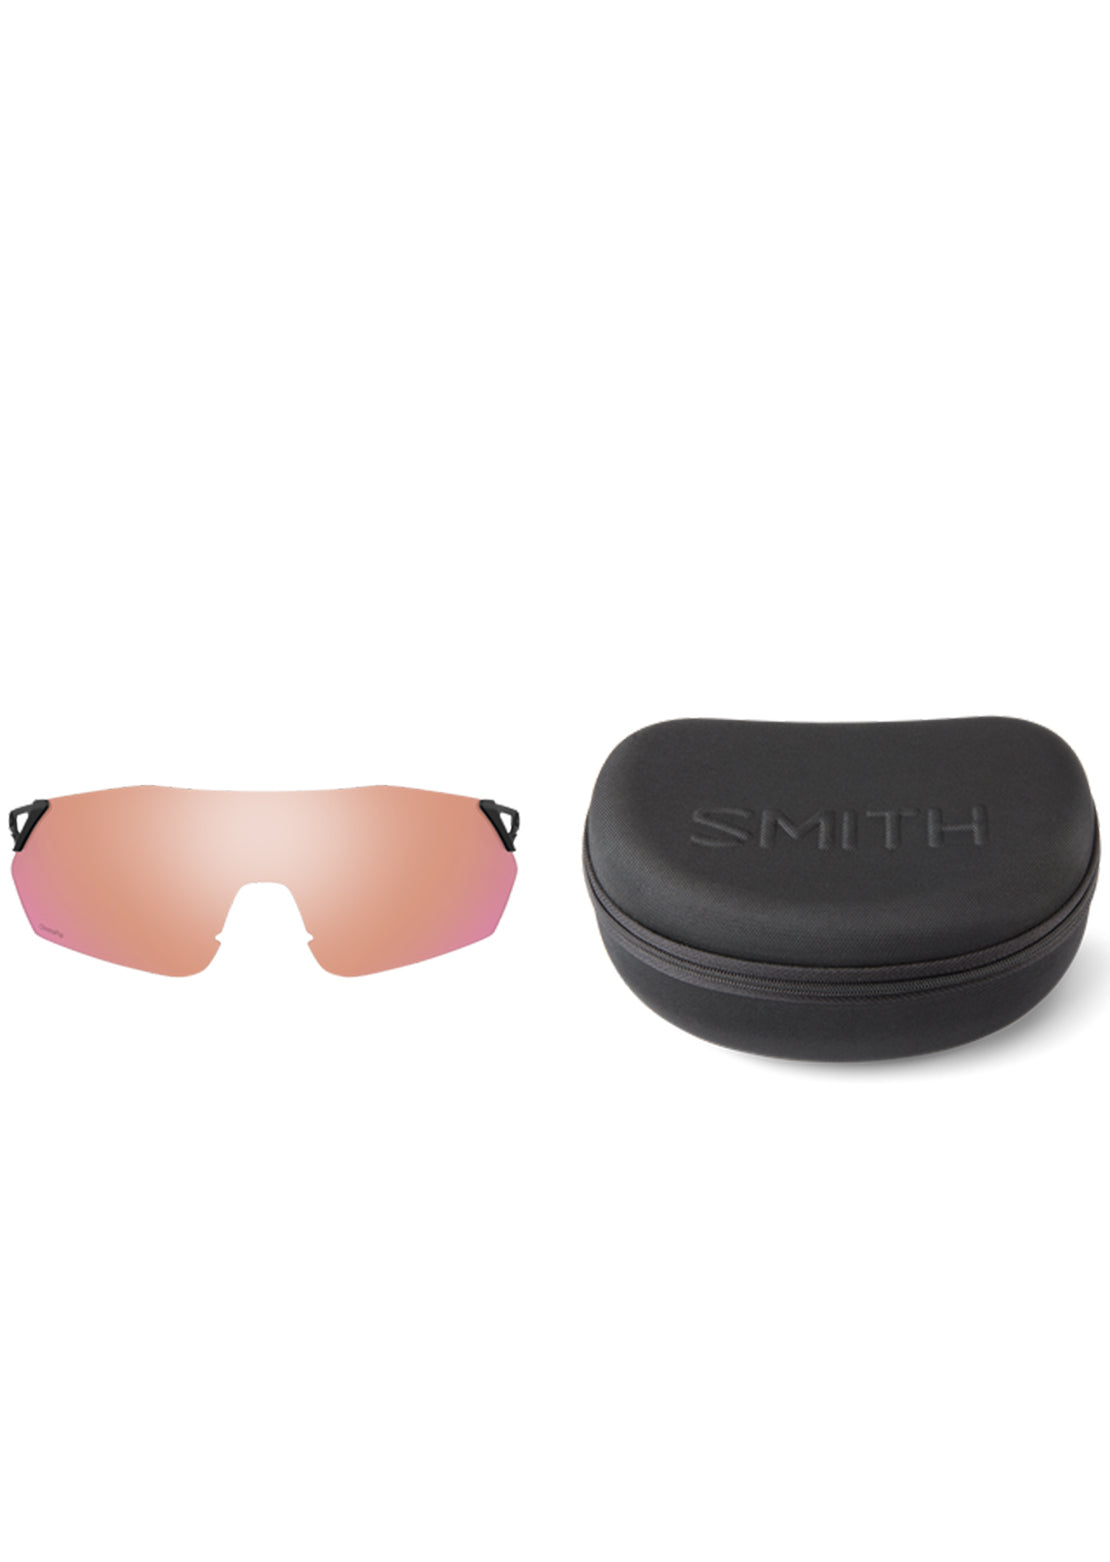 Smith Ruckus Bike Sunglasses Matte Black Cinder/ChromaPop Red Mirror/ChromaPop Contrast Rose